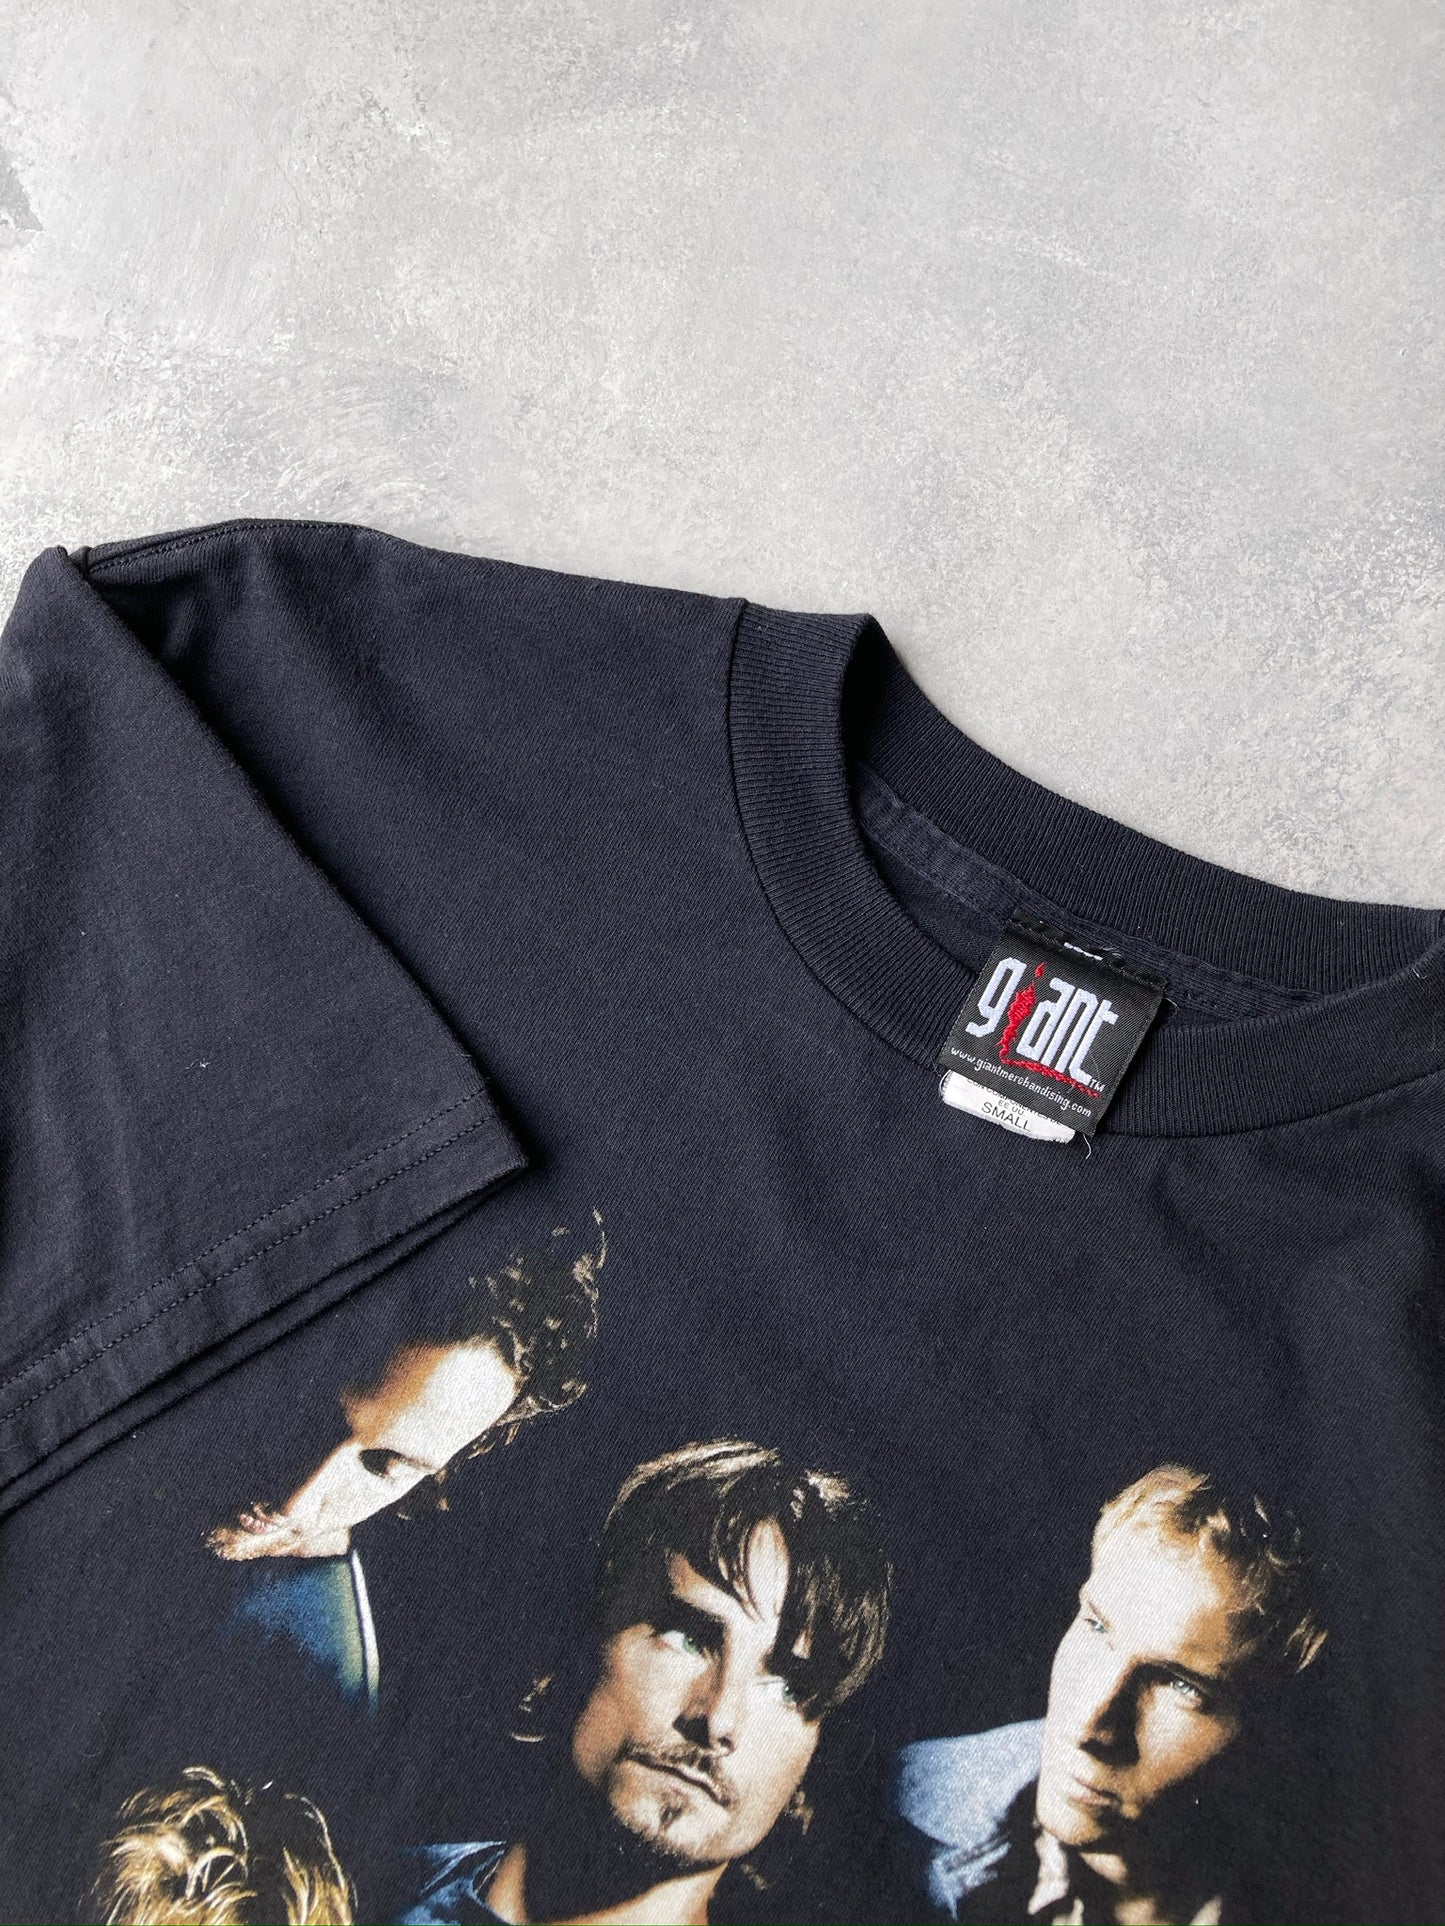 Backstreet Boys Tour T-Shirt '01 - Small